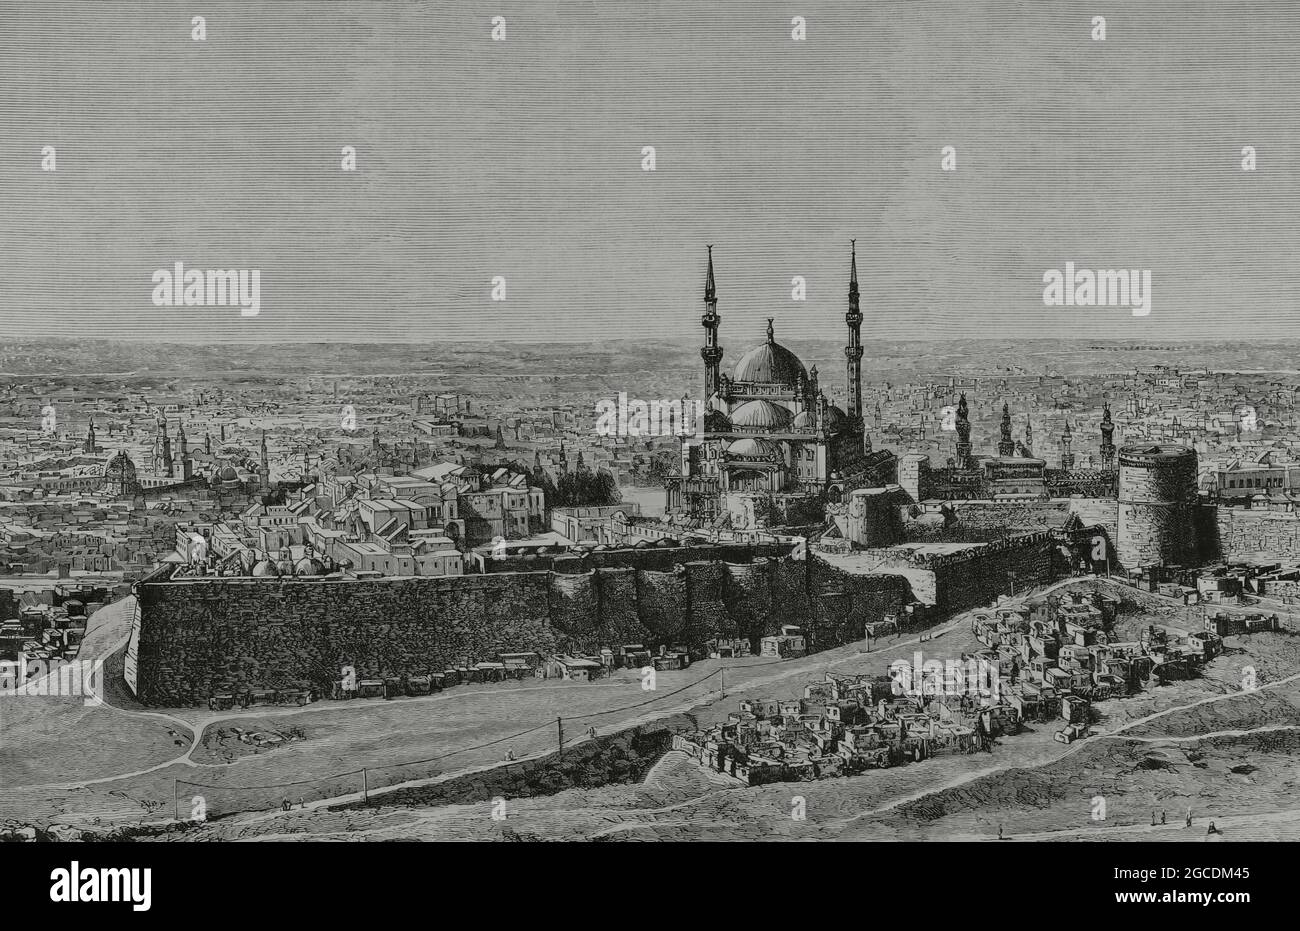 Egypt, Cairo. General view of the city, taken in front of the citadel and the Sultan Hassan Mosque. Engraving by Capuz. La Ilustración Española y Americanaca, 1882. Stock Photo